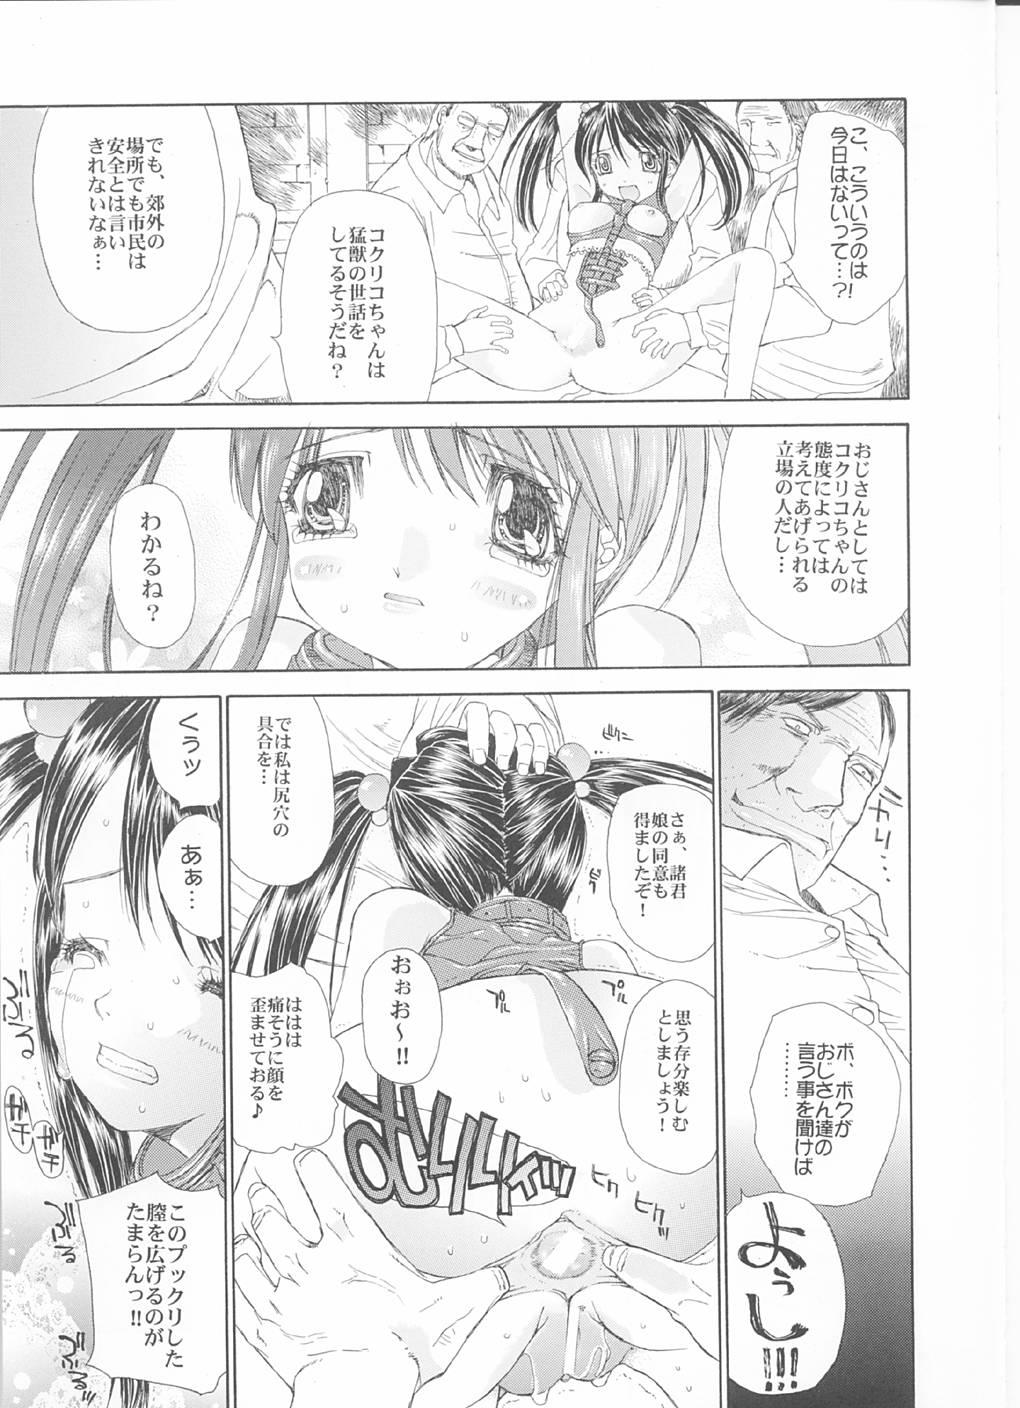 Gordita Outlet 7 - Sakura taisen Cojiendo - Page 9